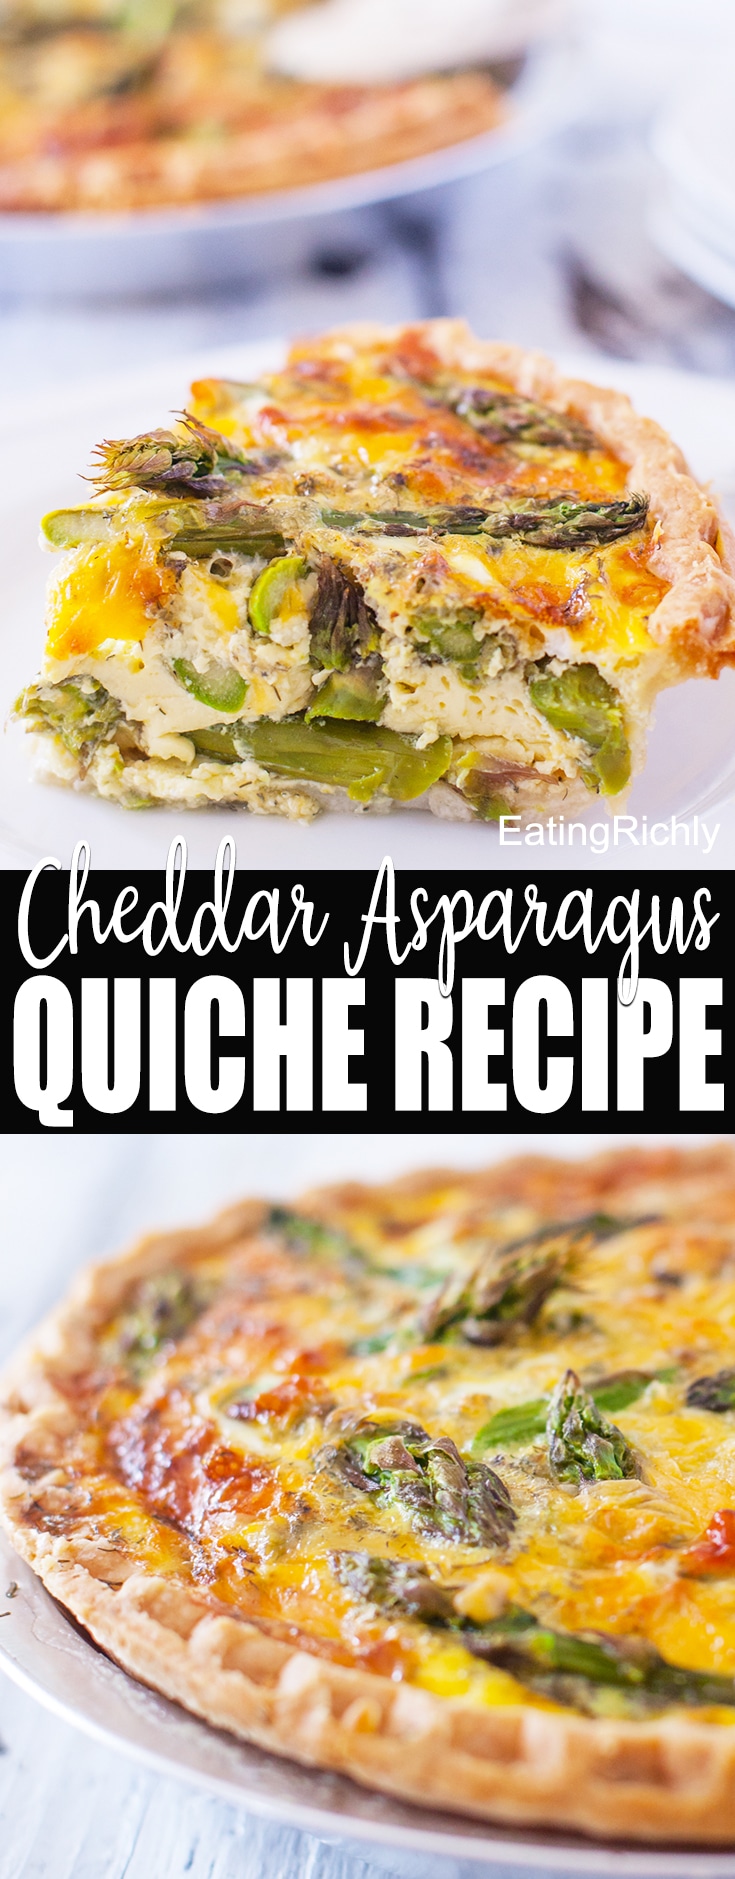 Asparagus Quiche Brunch Recipe